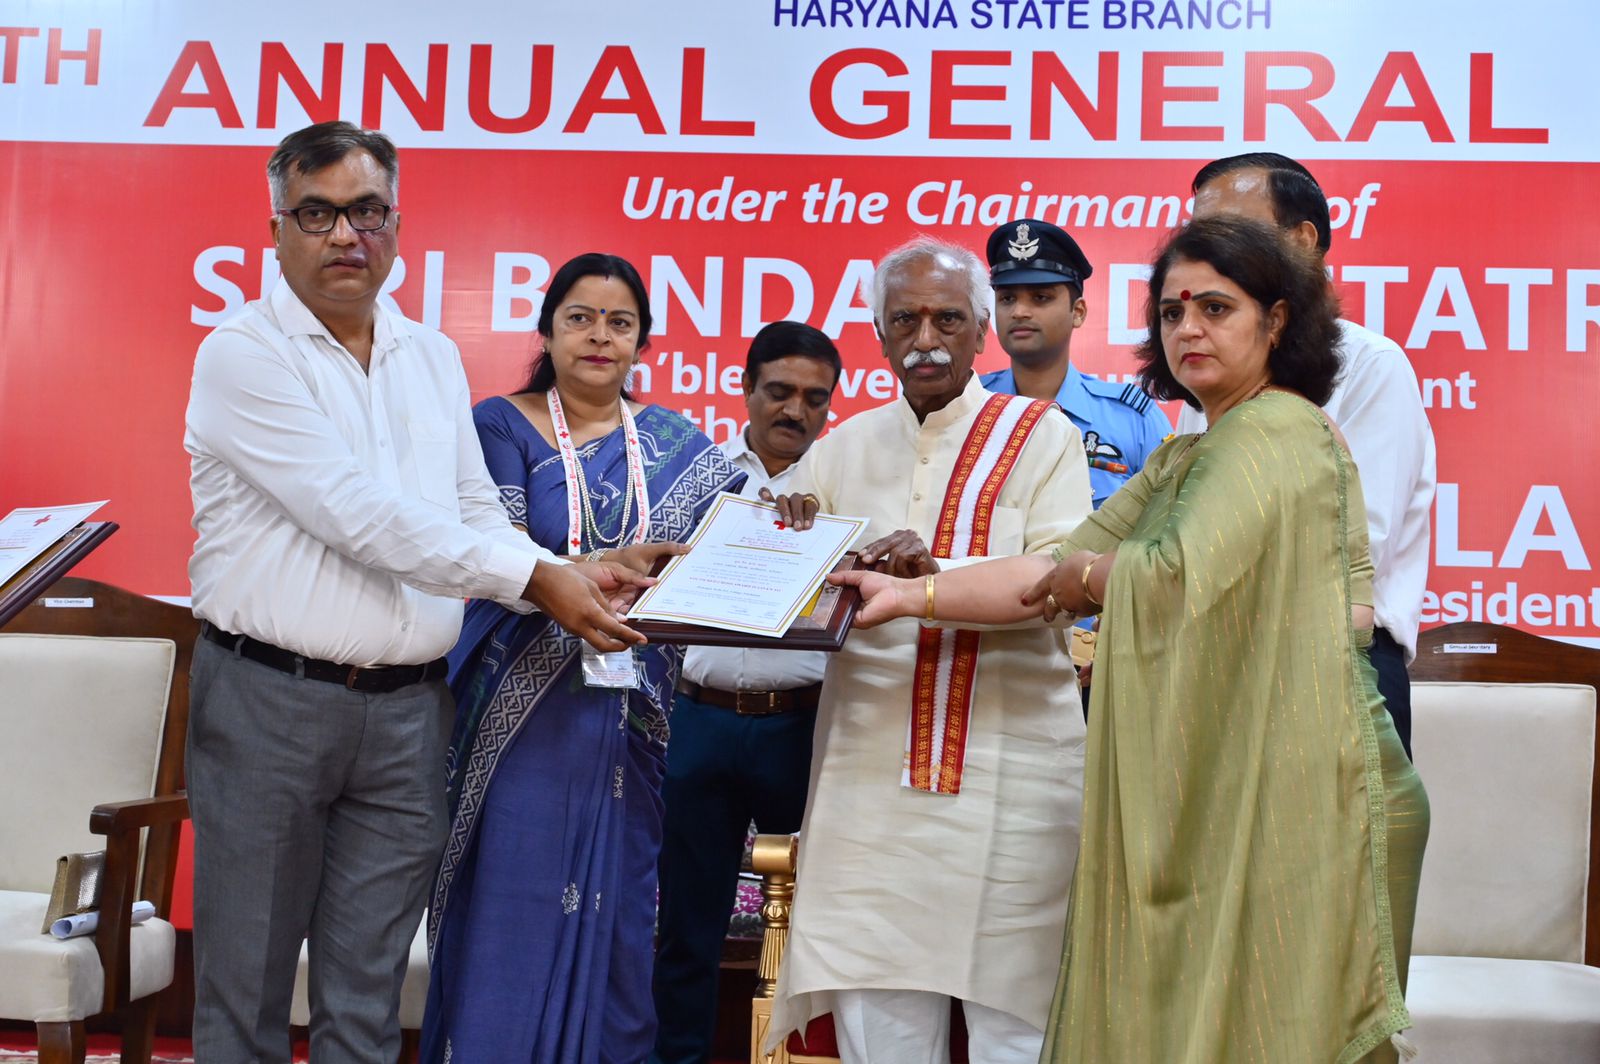 Prof. Pratibha Makhija, Counsellor, YRC Got Youth Red Cross Award 2019-20 from Hon'ble Governor at Haryana Raj Bhawan Chandigarh